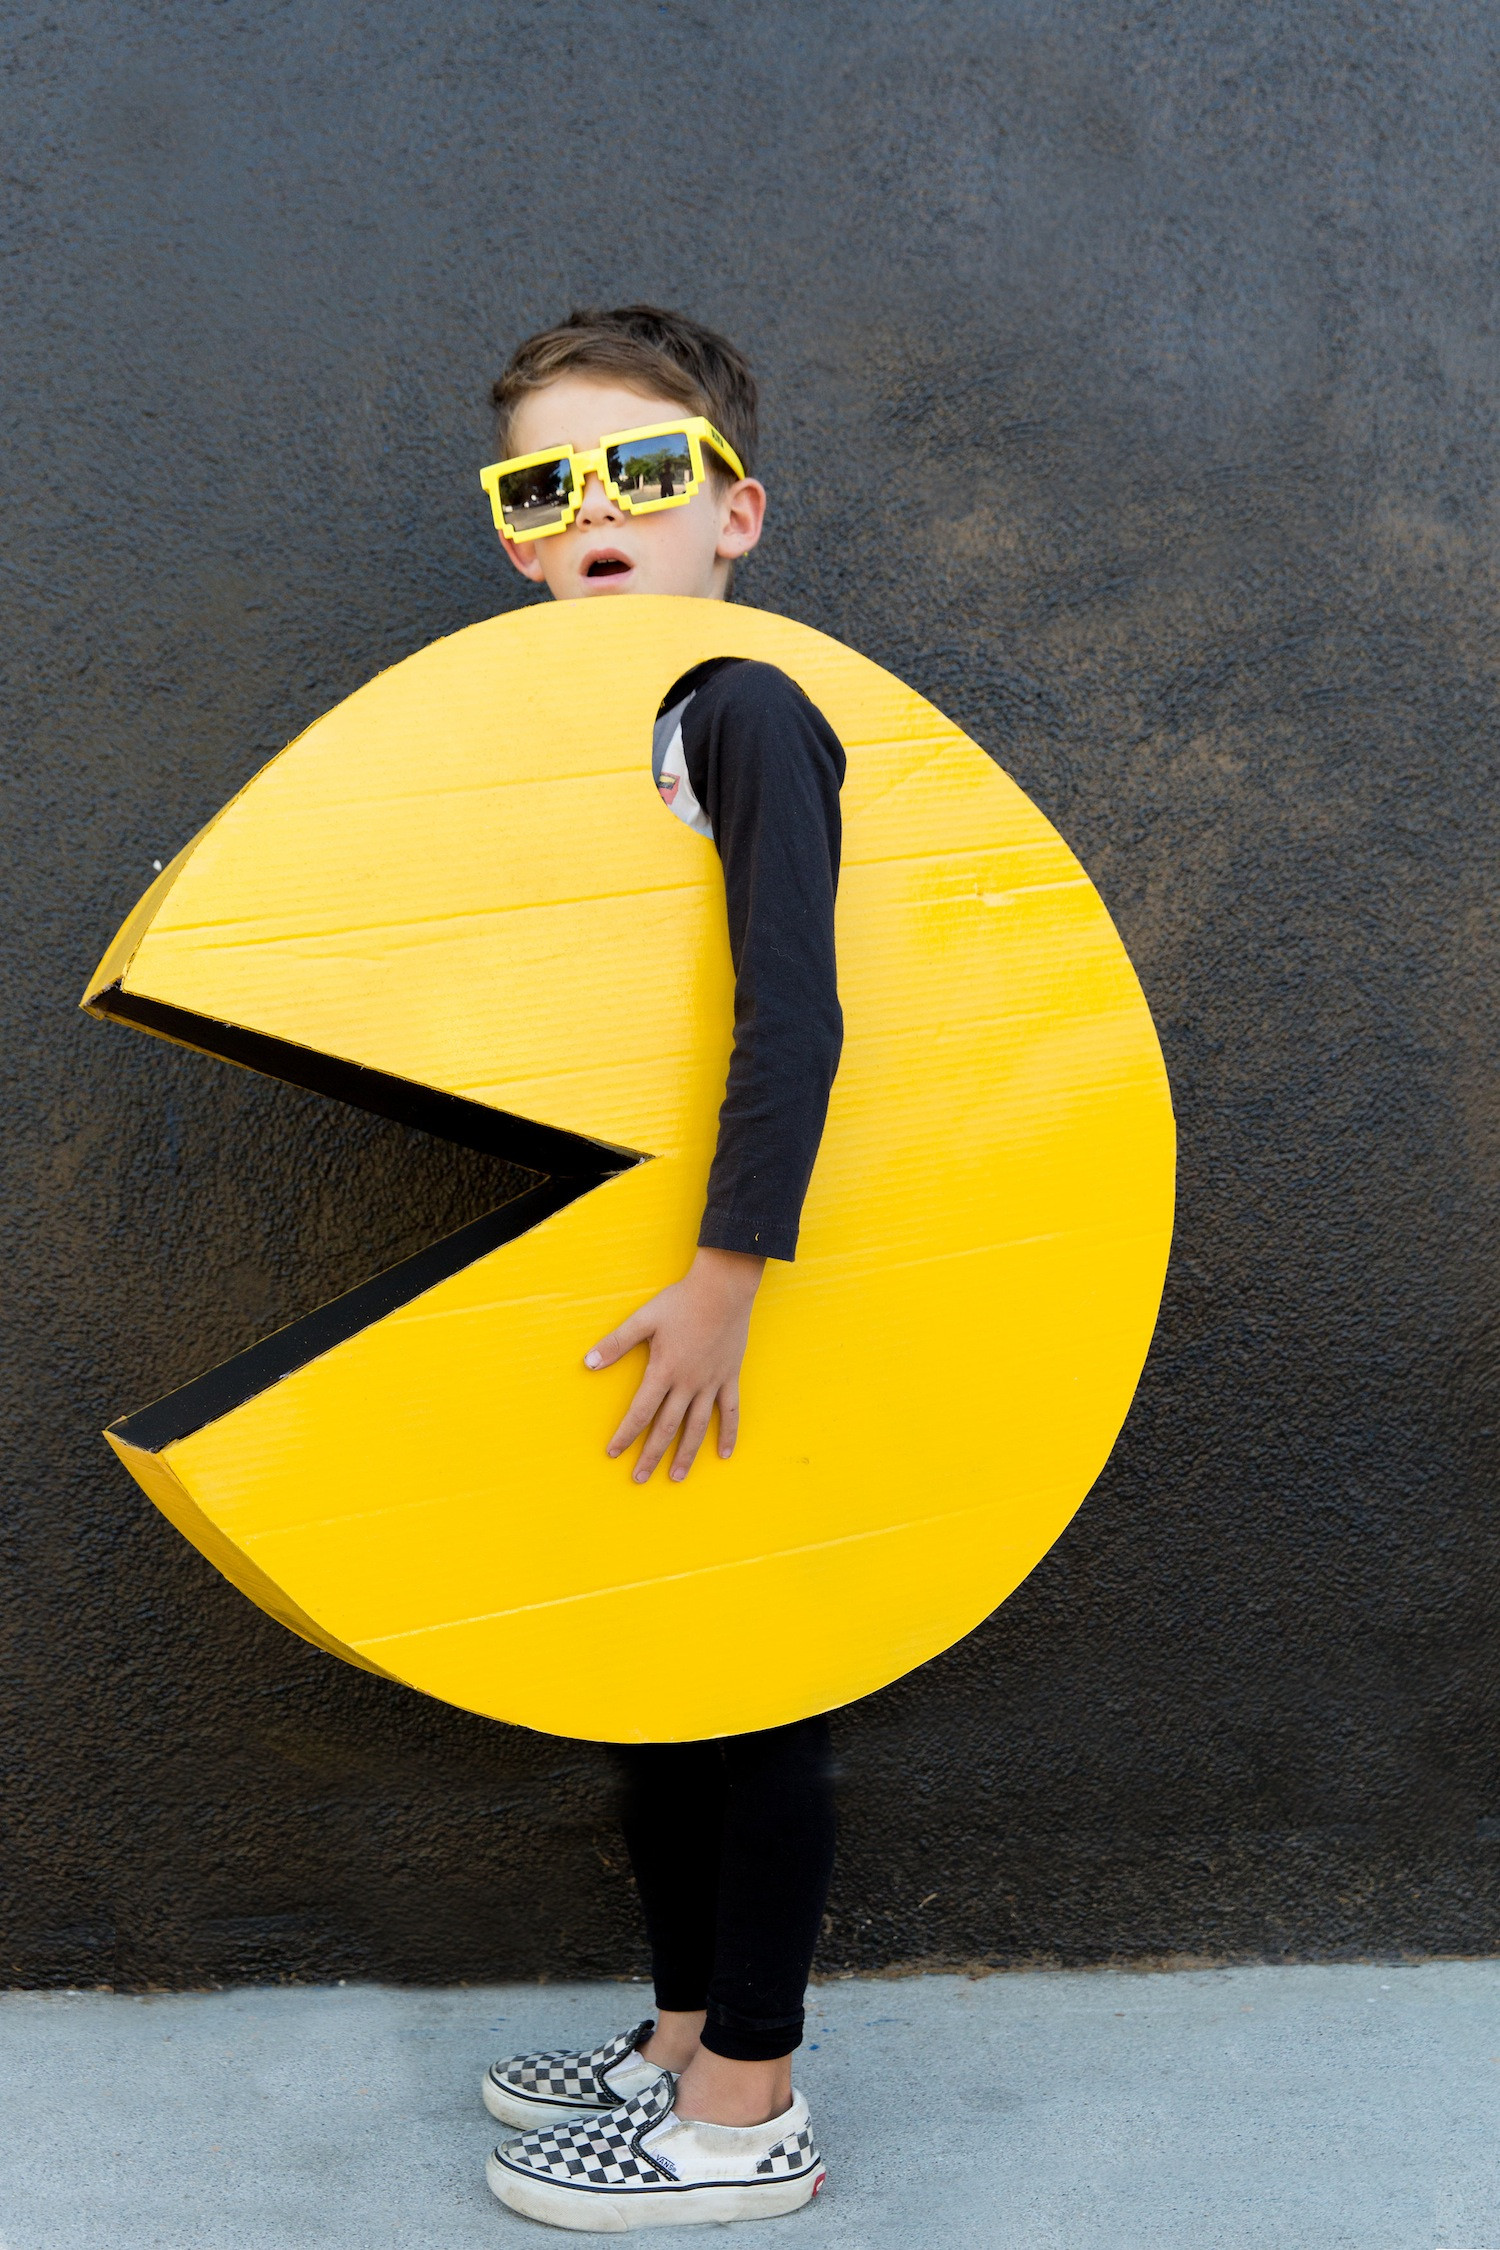 Pacman Costume DIY
 DIY Kids PAC MAN Halloween Costume The Effortless Chic